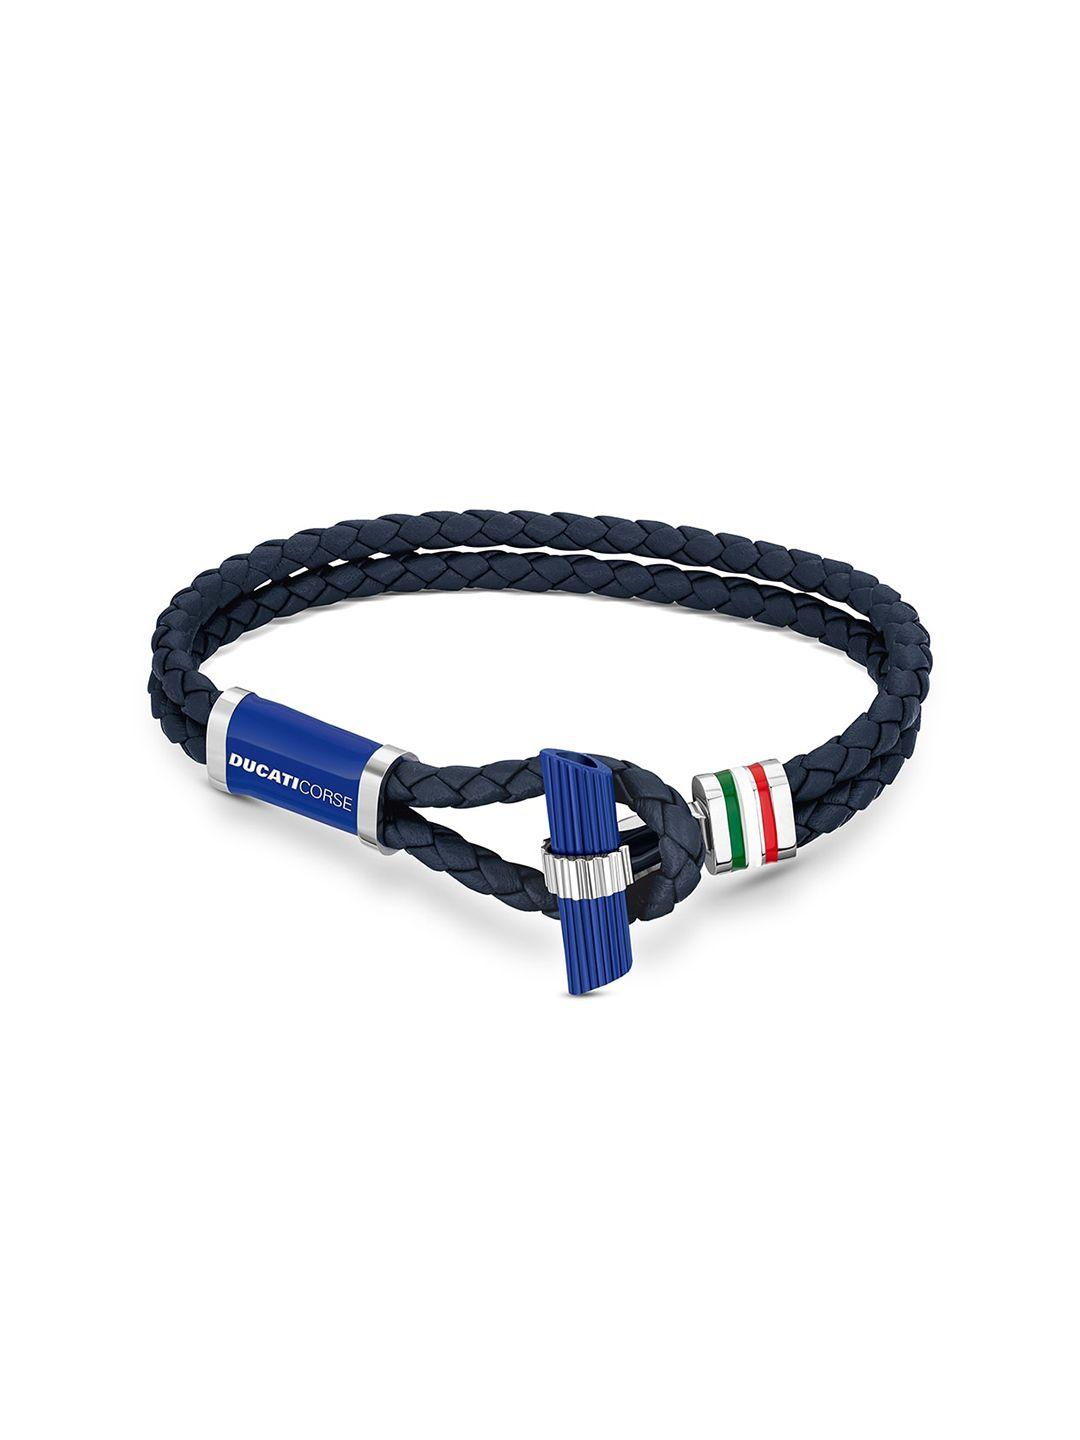 ducati corse men silver-toned & blue leather braided bracelet